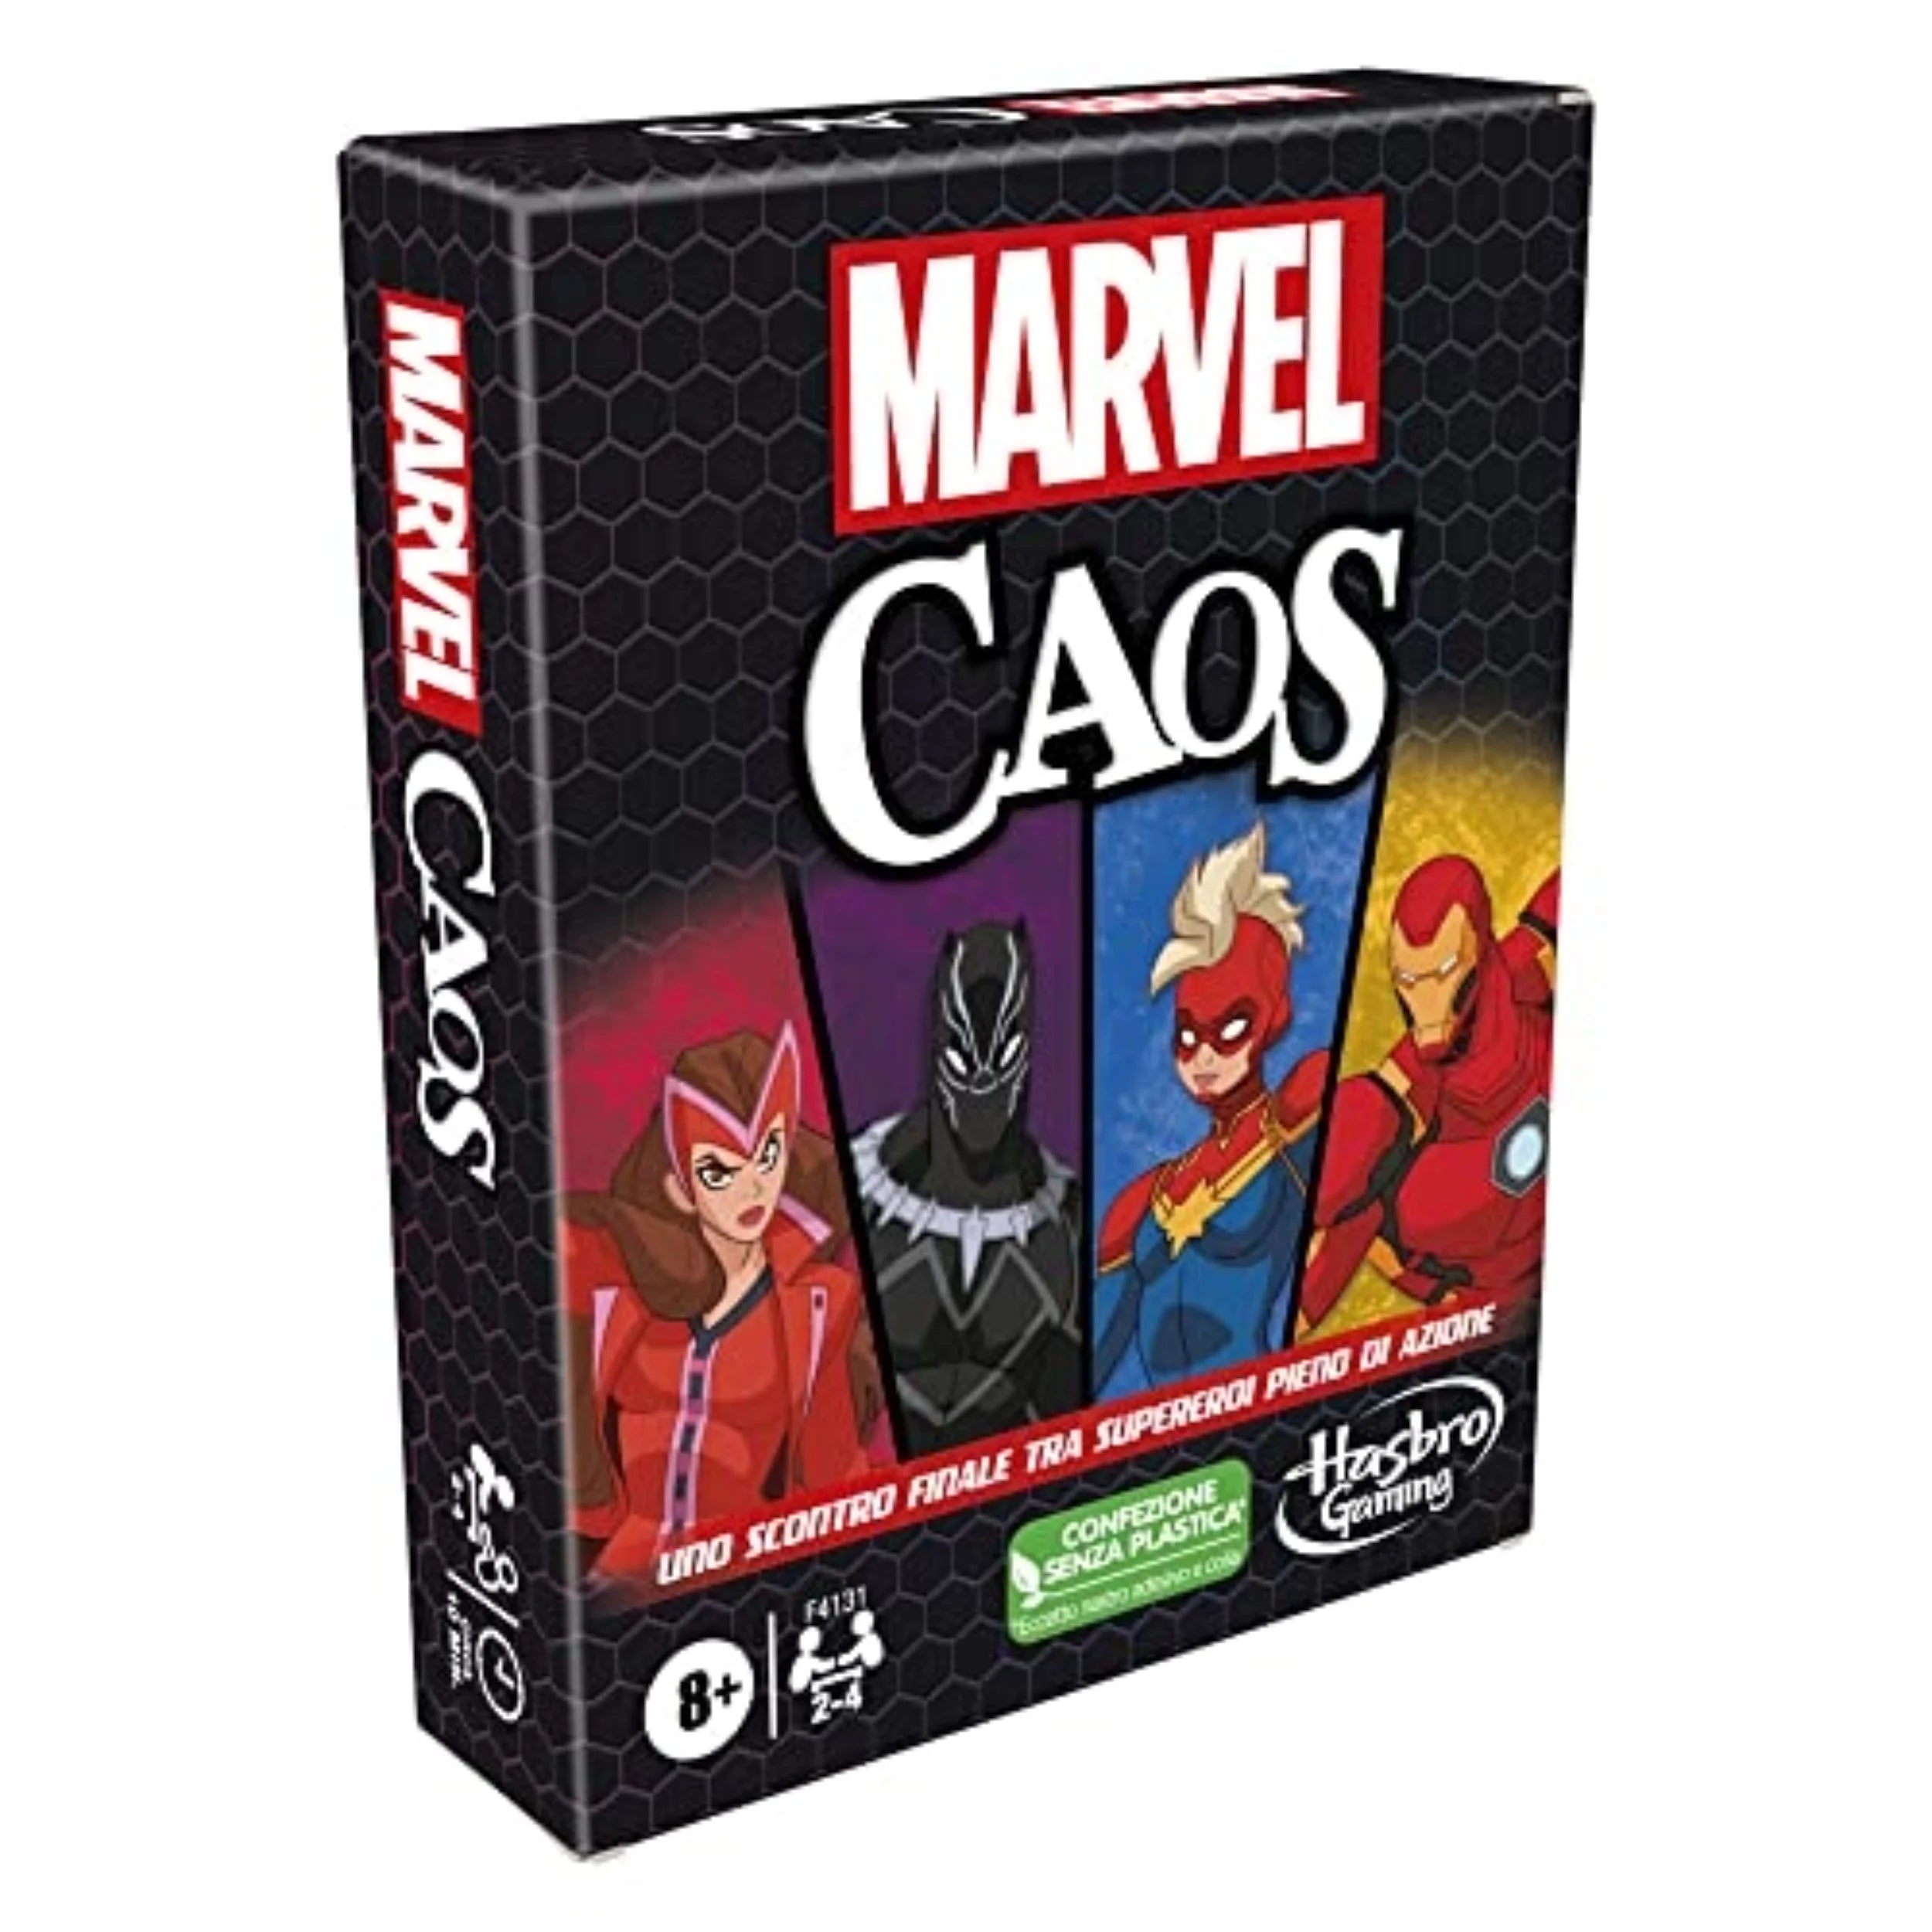 Hasbro Fan - Marvel Caos - Board Game - Italian Edition